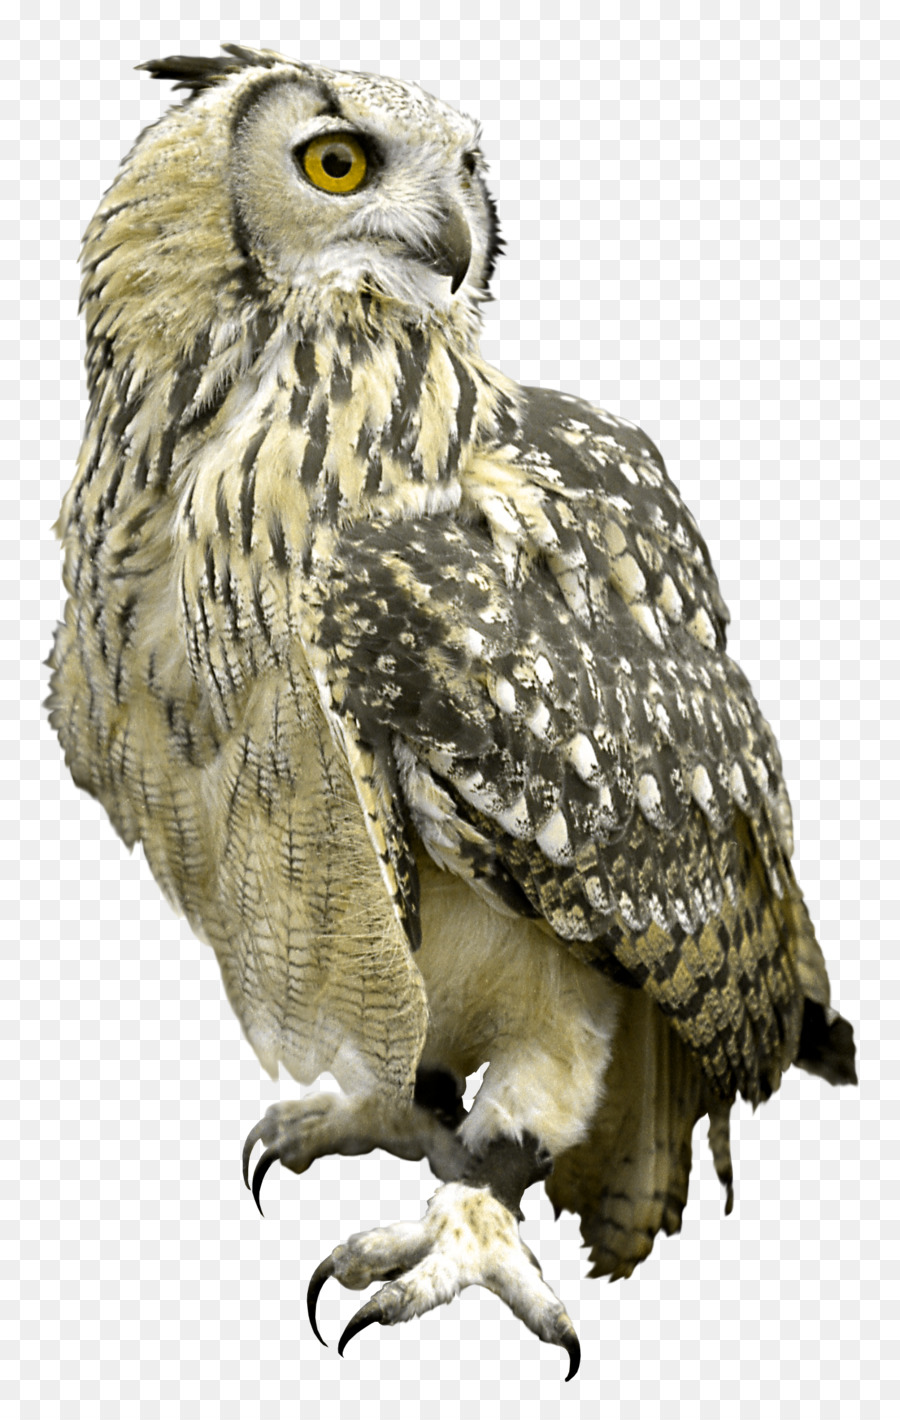 Great Grey Owl Bird Hawk - owl png download - 1450*2277 - Free Transparent Great Grey Owl png Download.